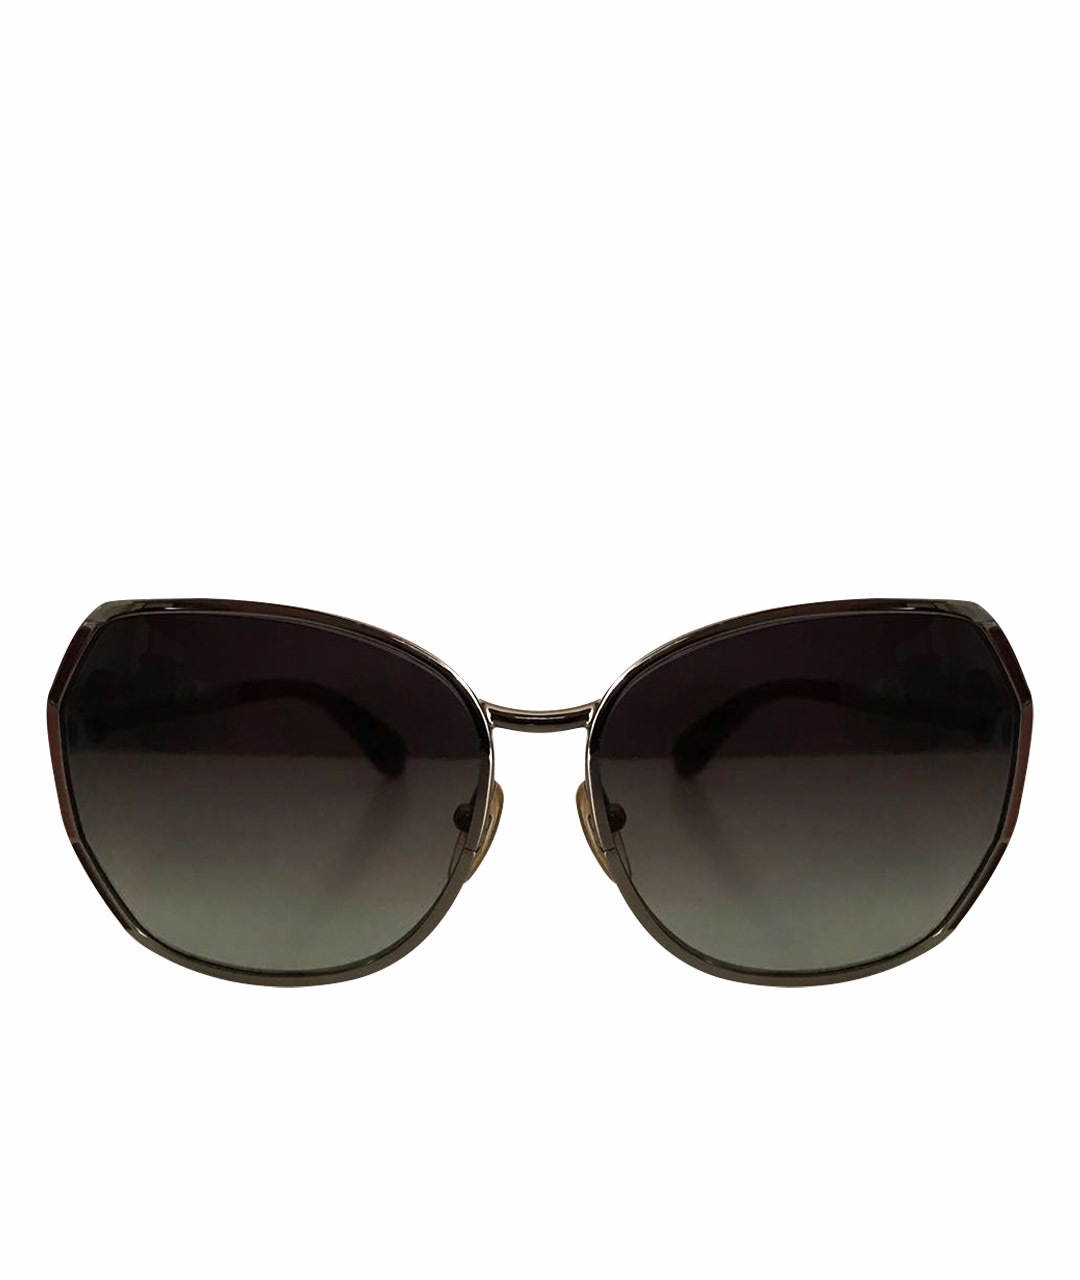 MARC BY MARC JACOBS Бордовые металлические солнцезащитные очки, фото 1